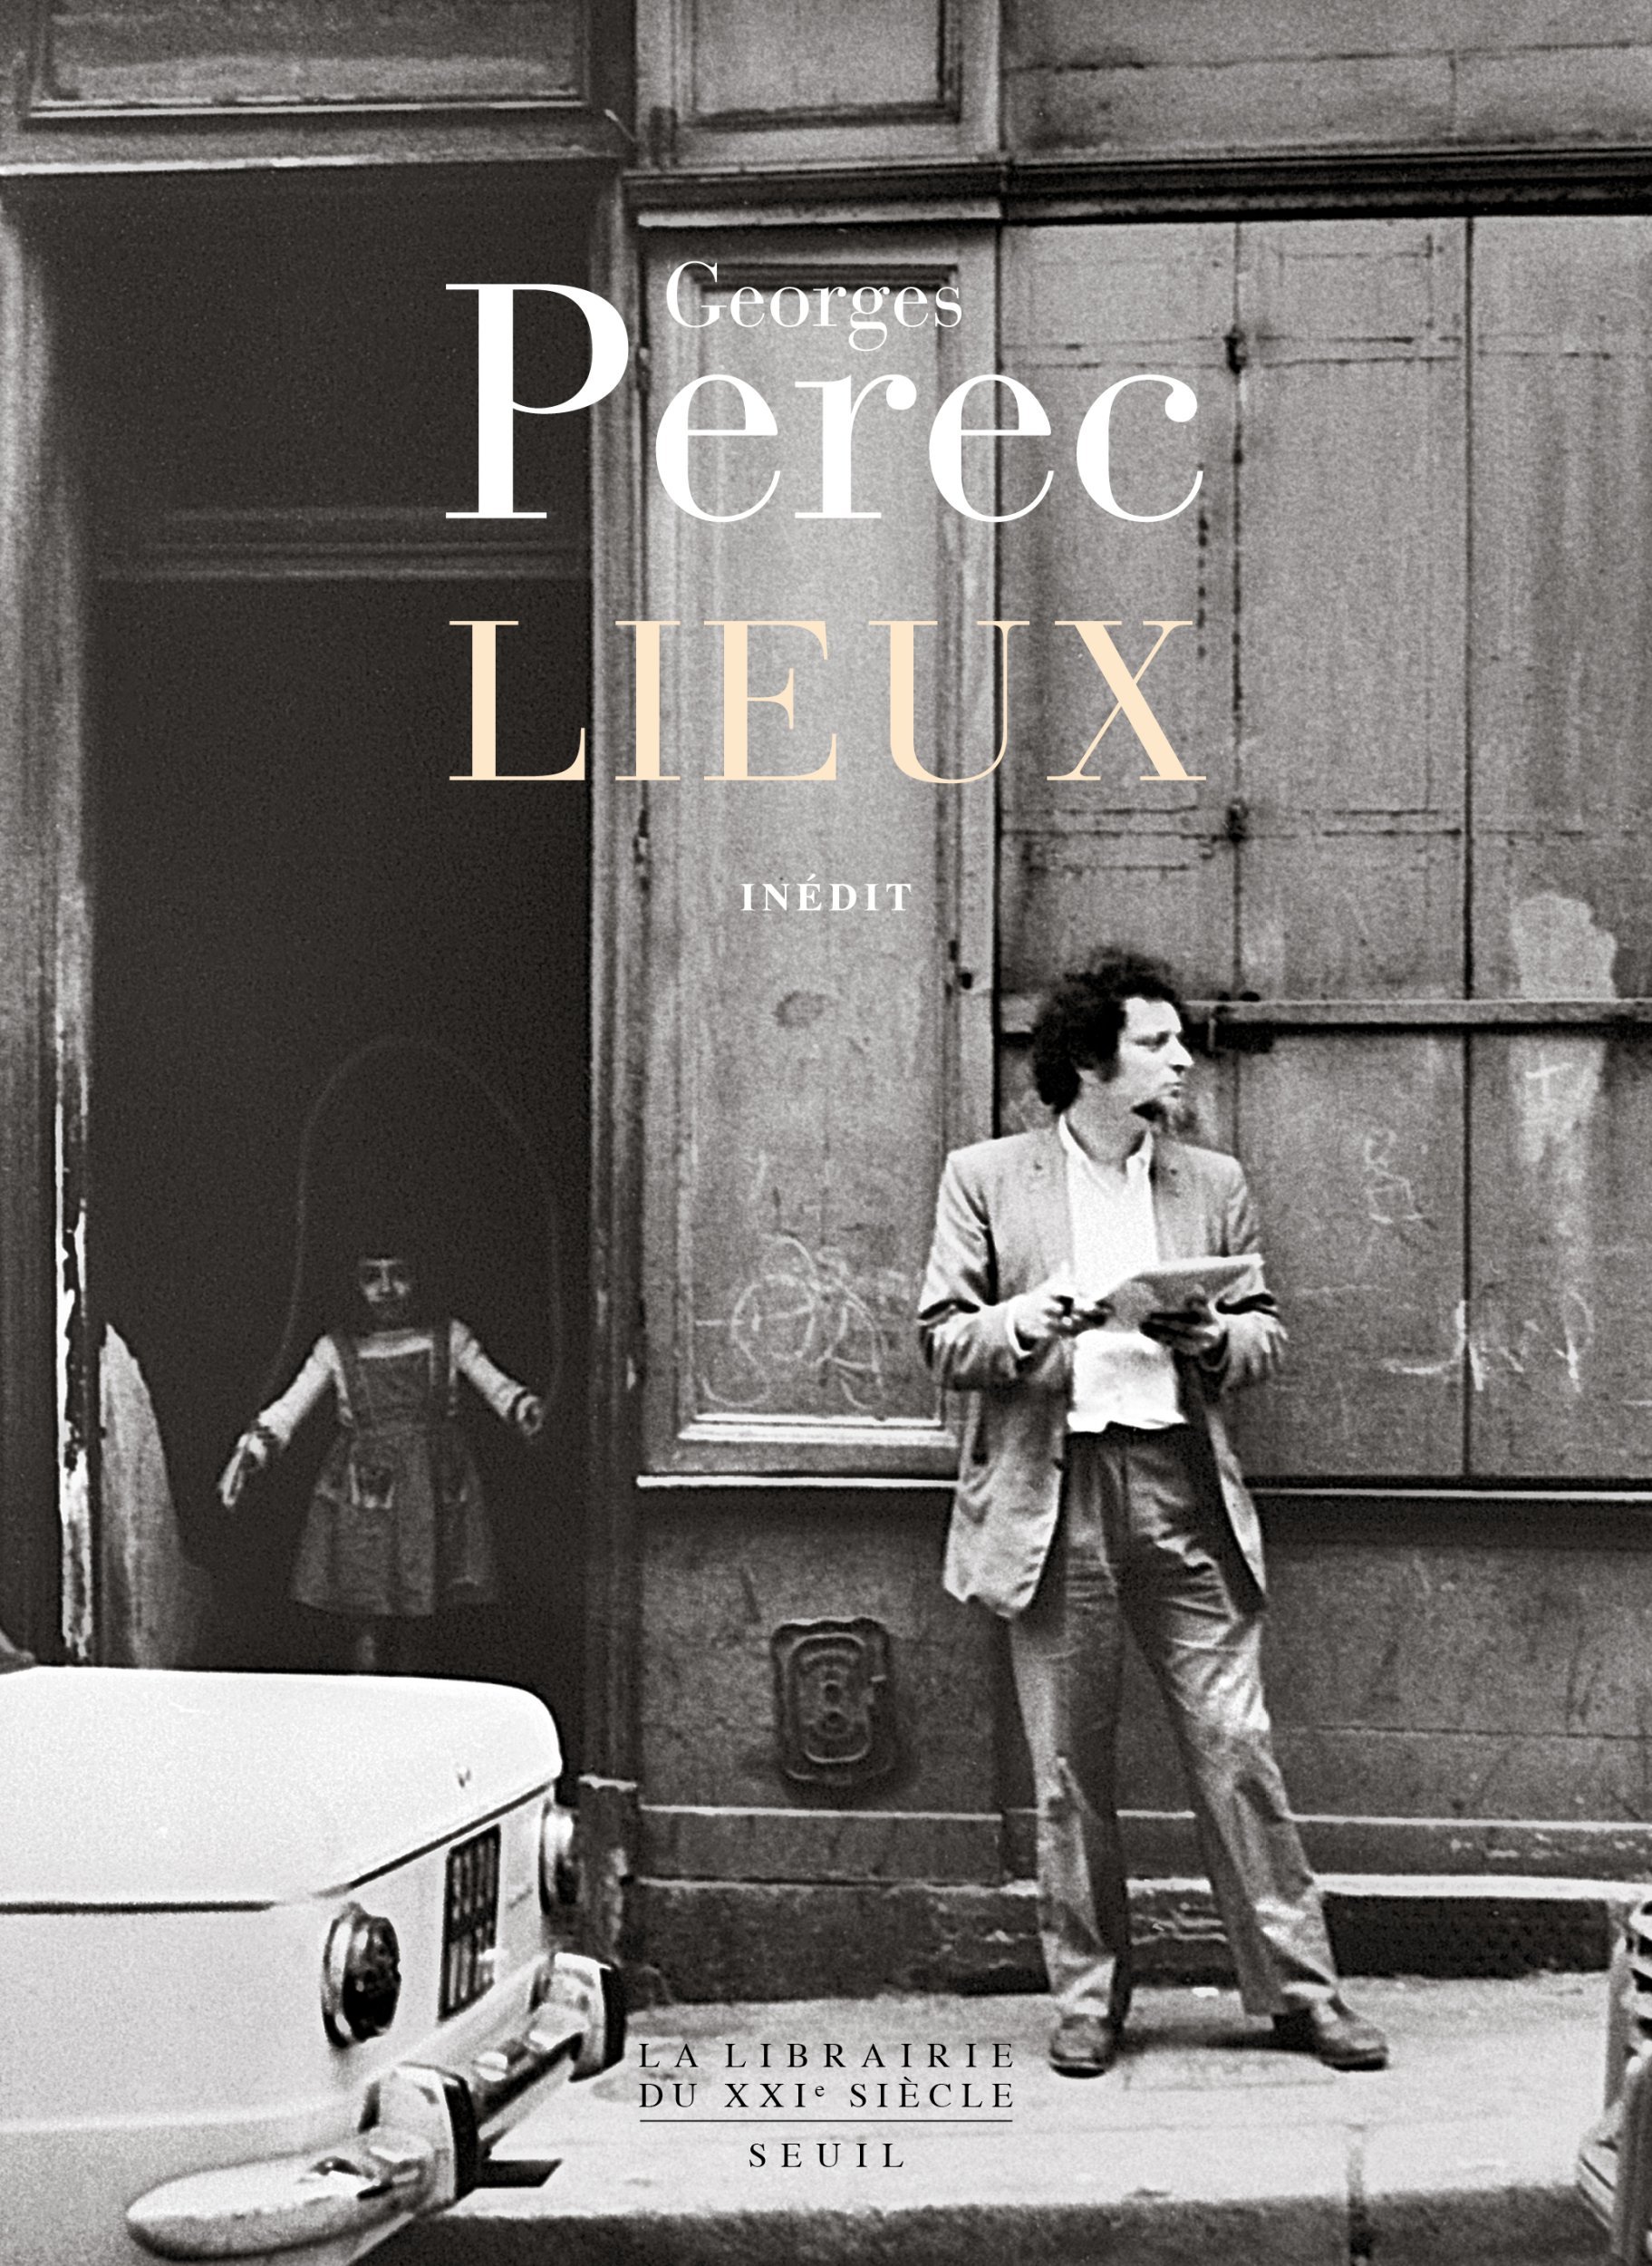 Lieux (9782021114096-front-cover)